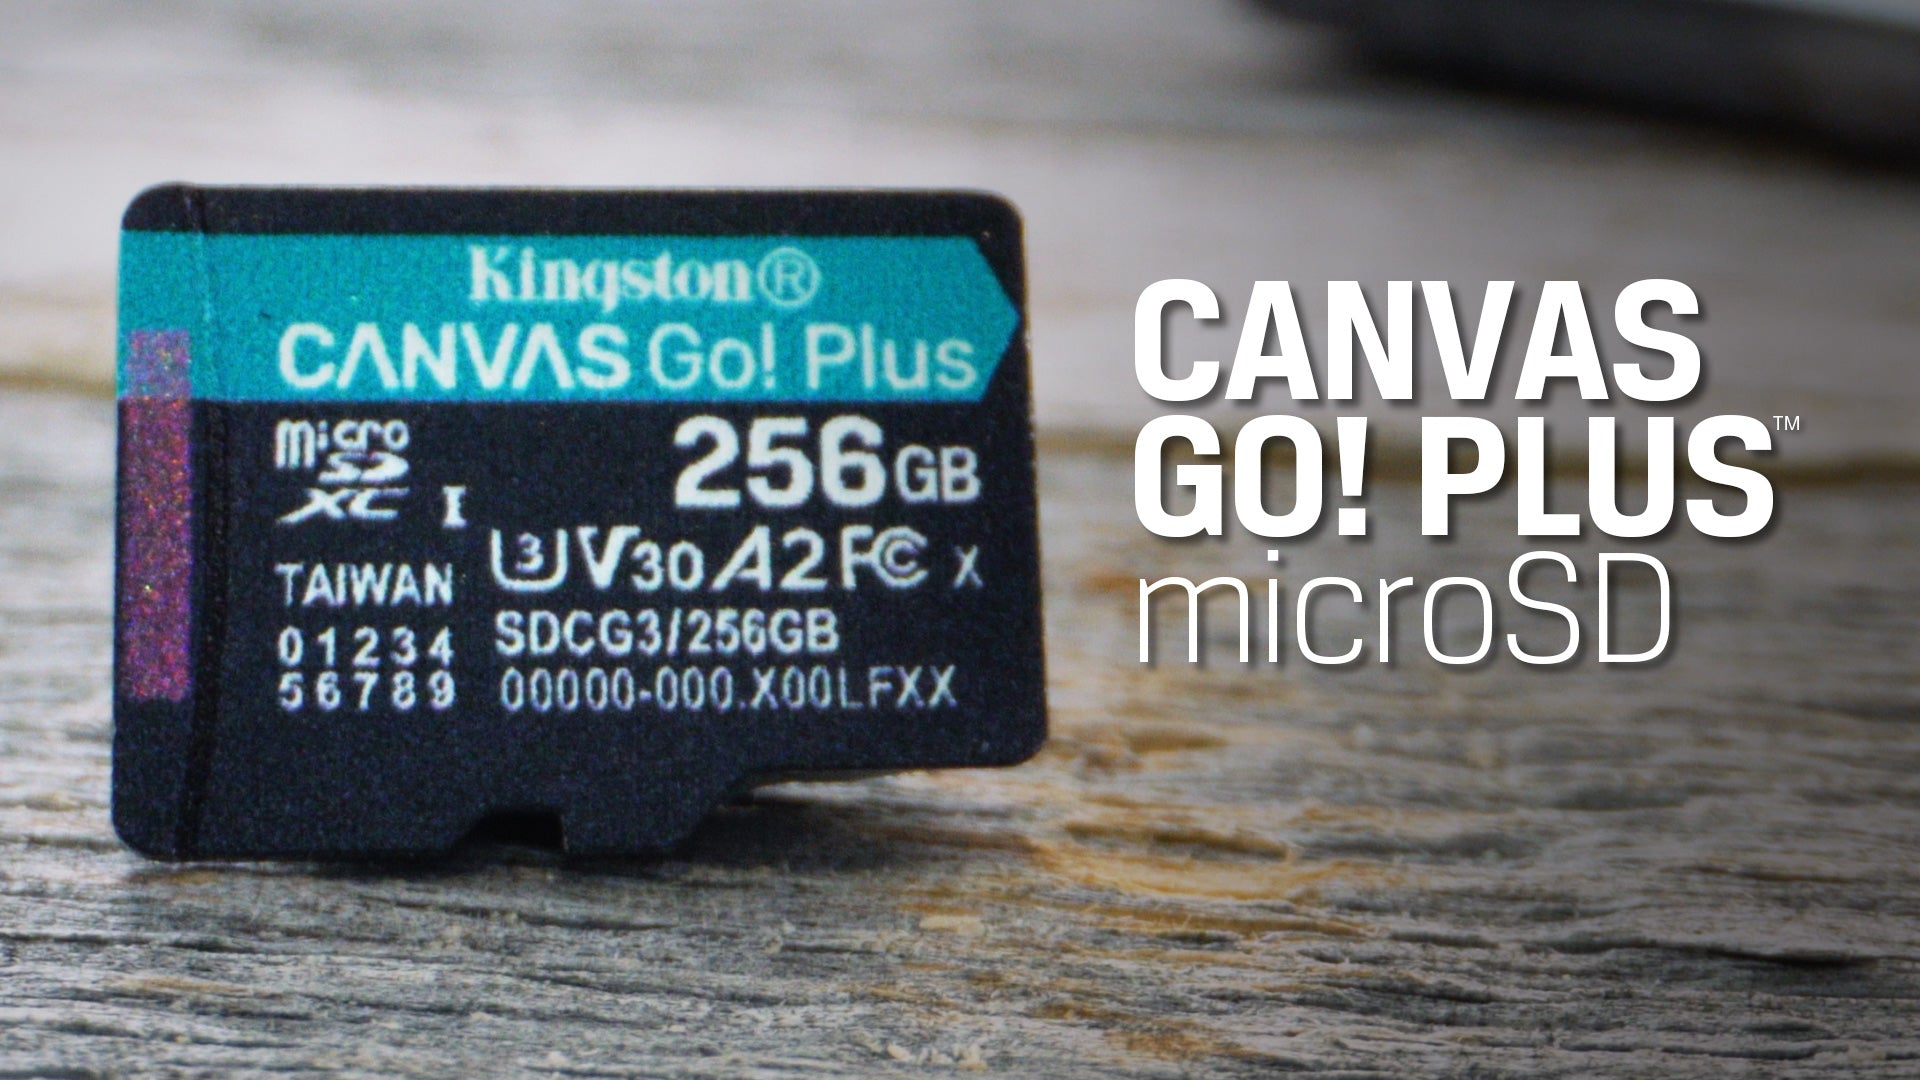 Canvas Go Plus microSD Memory Card